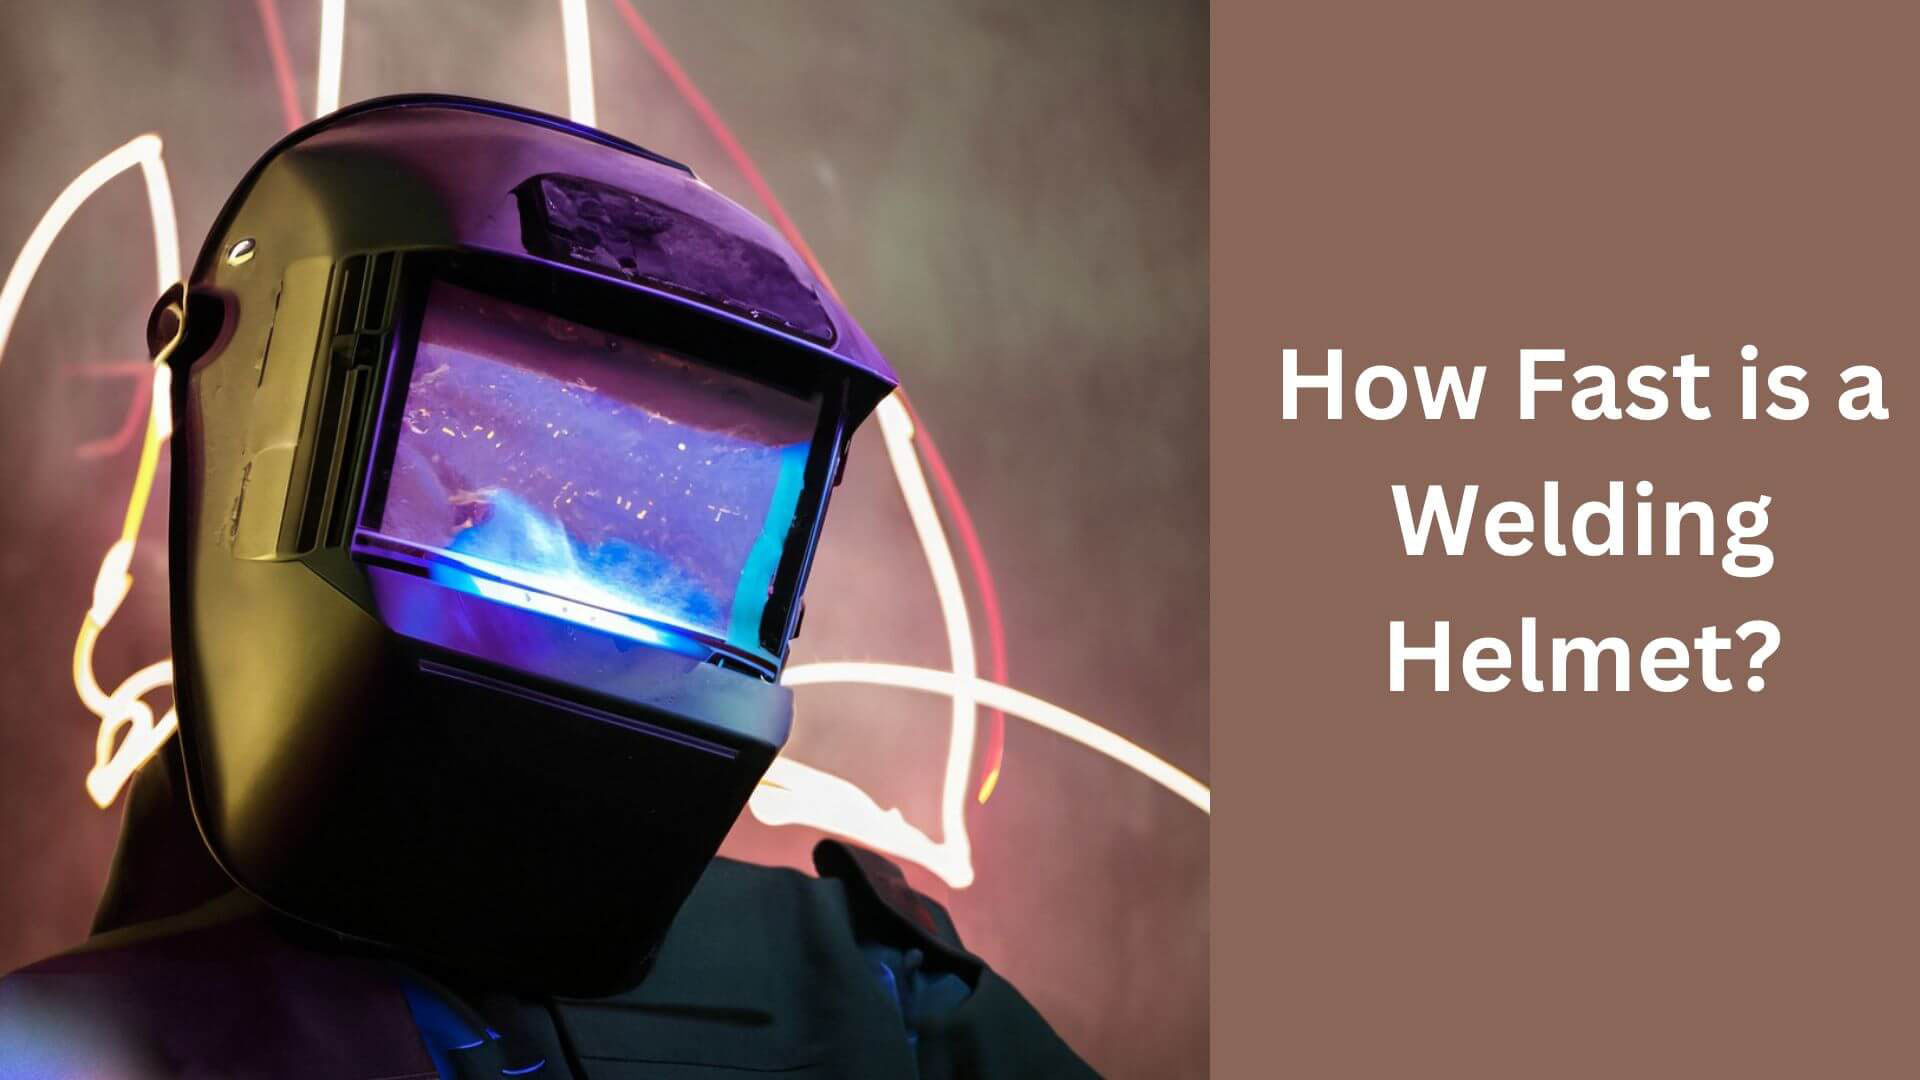 How Fast is a Welding Helmet?